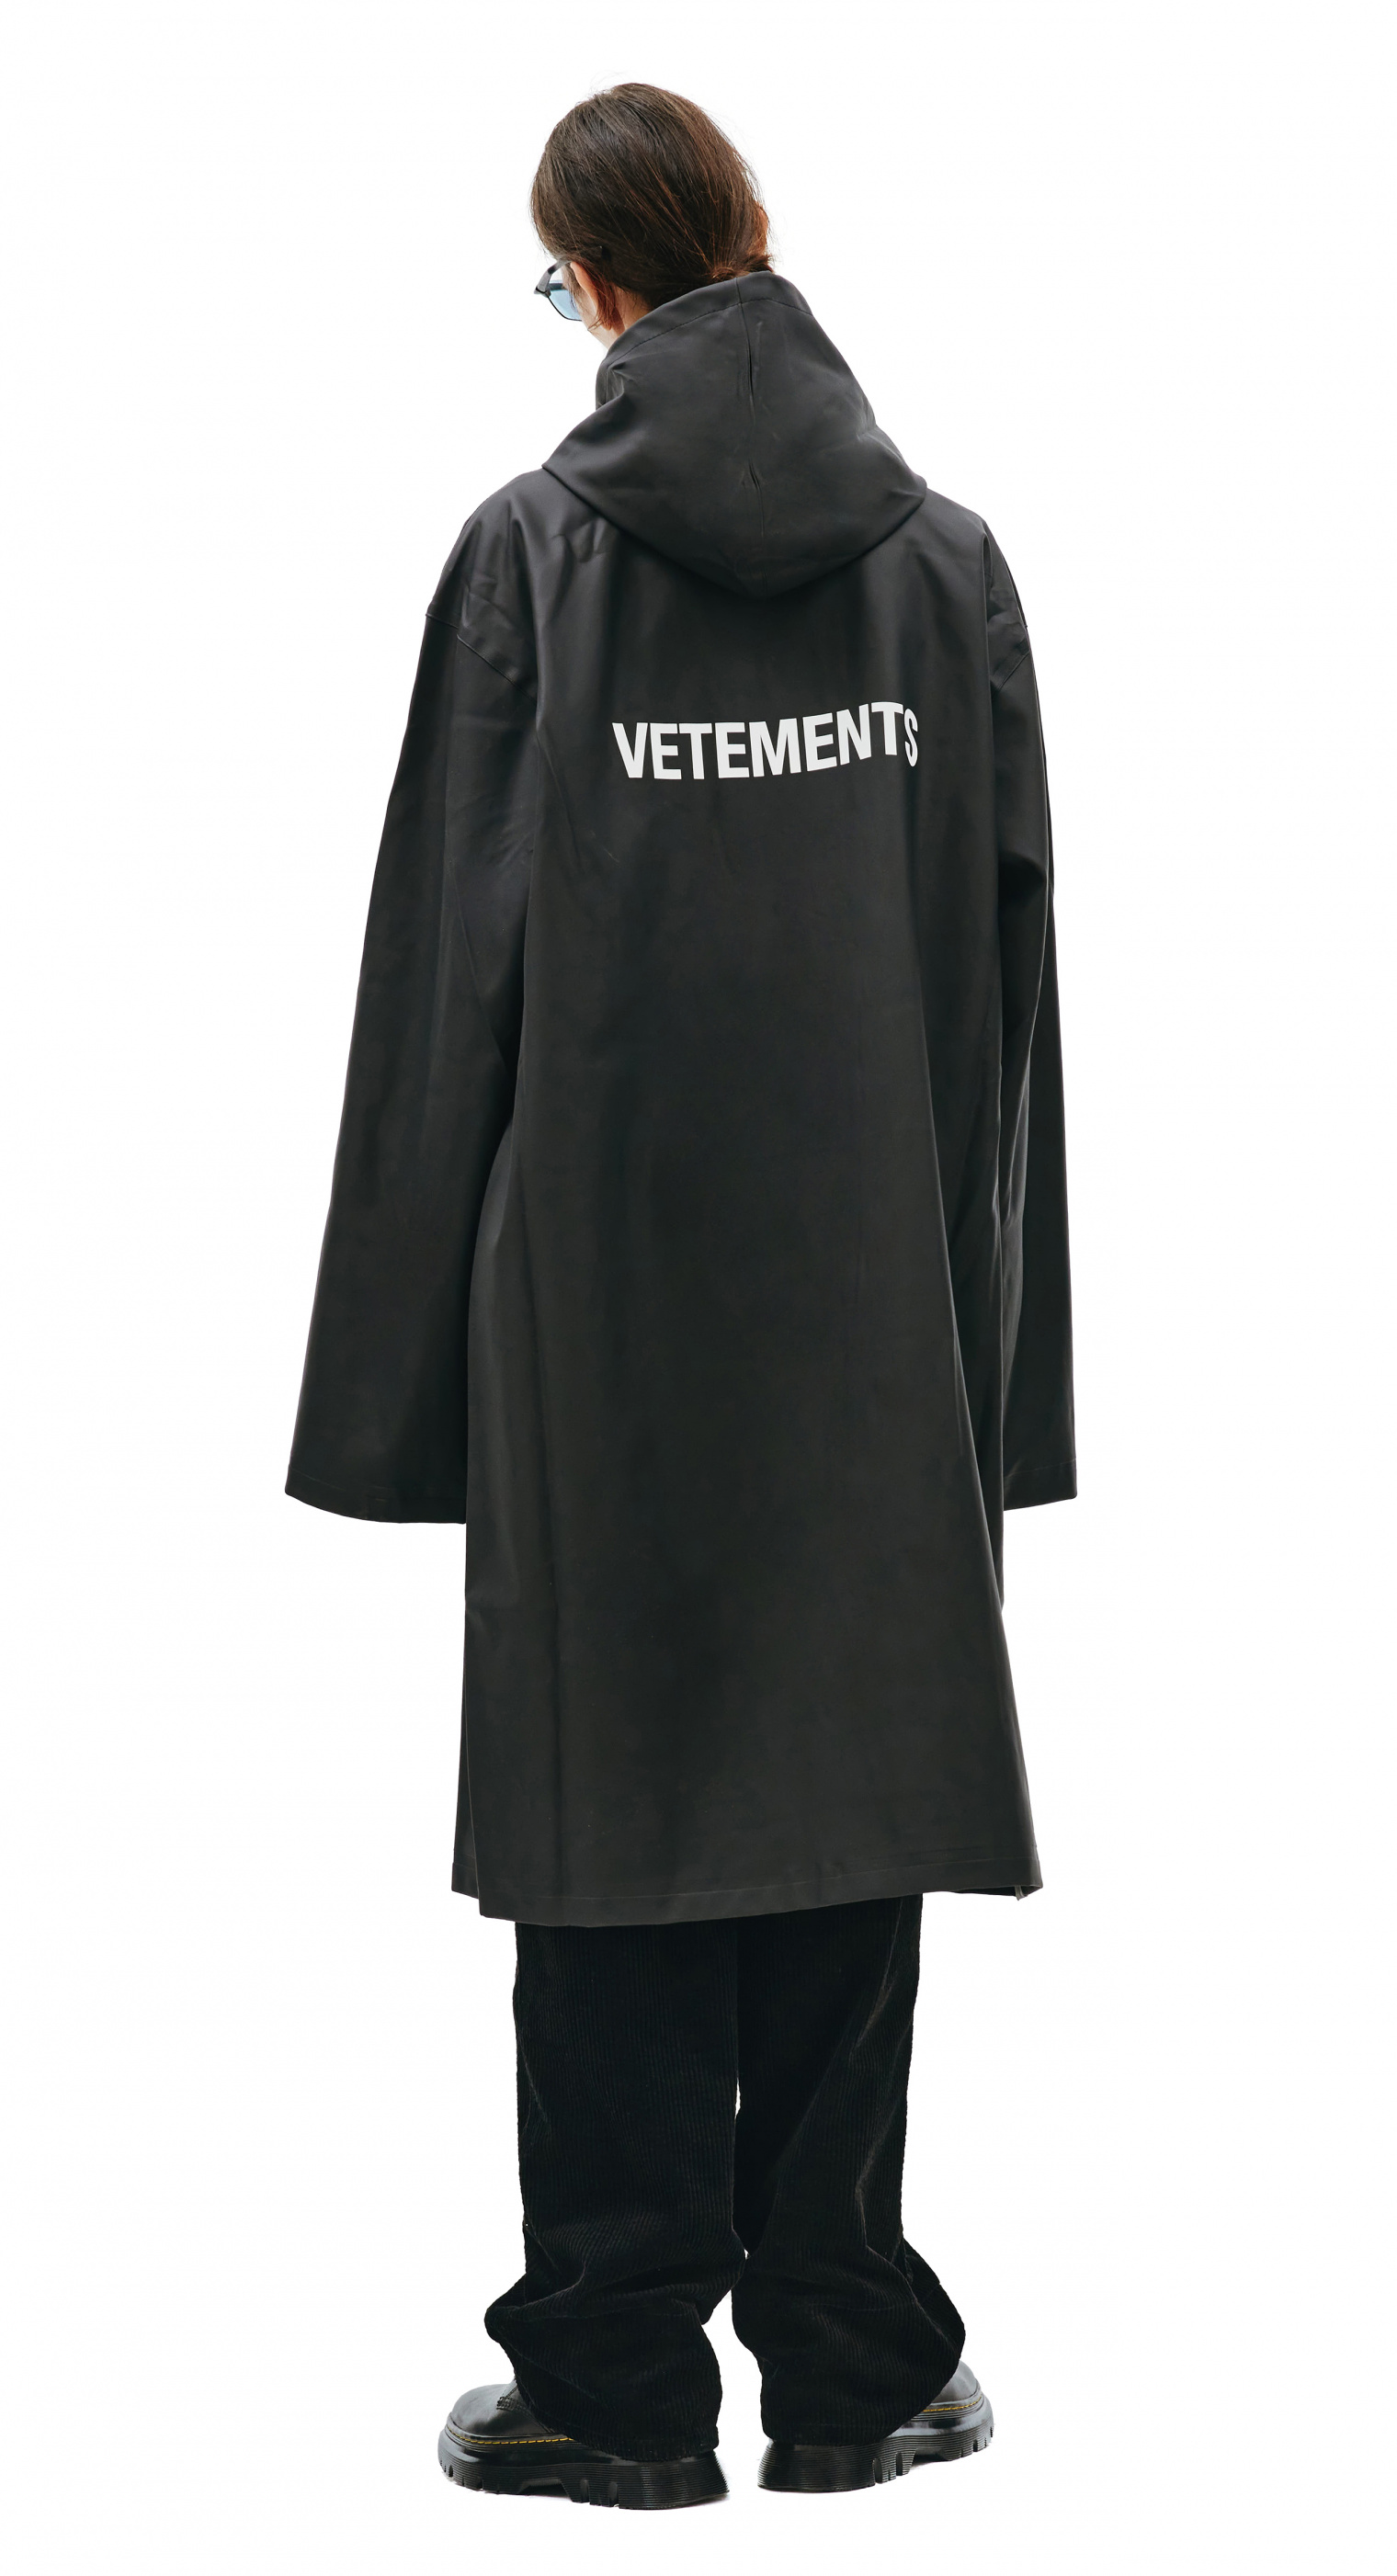 VETEMENTS Black rain coat with logo